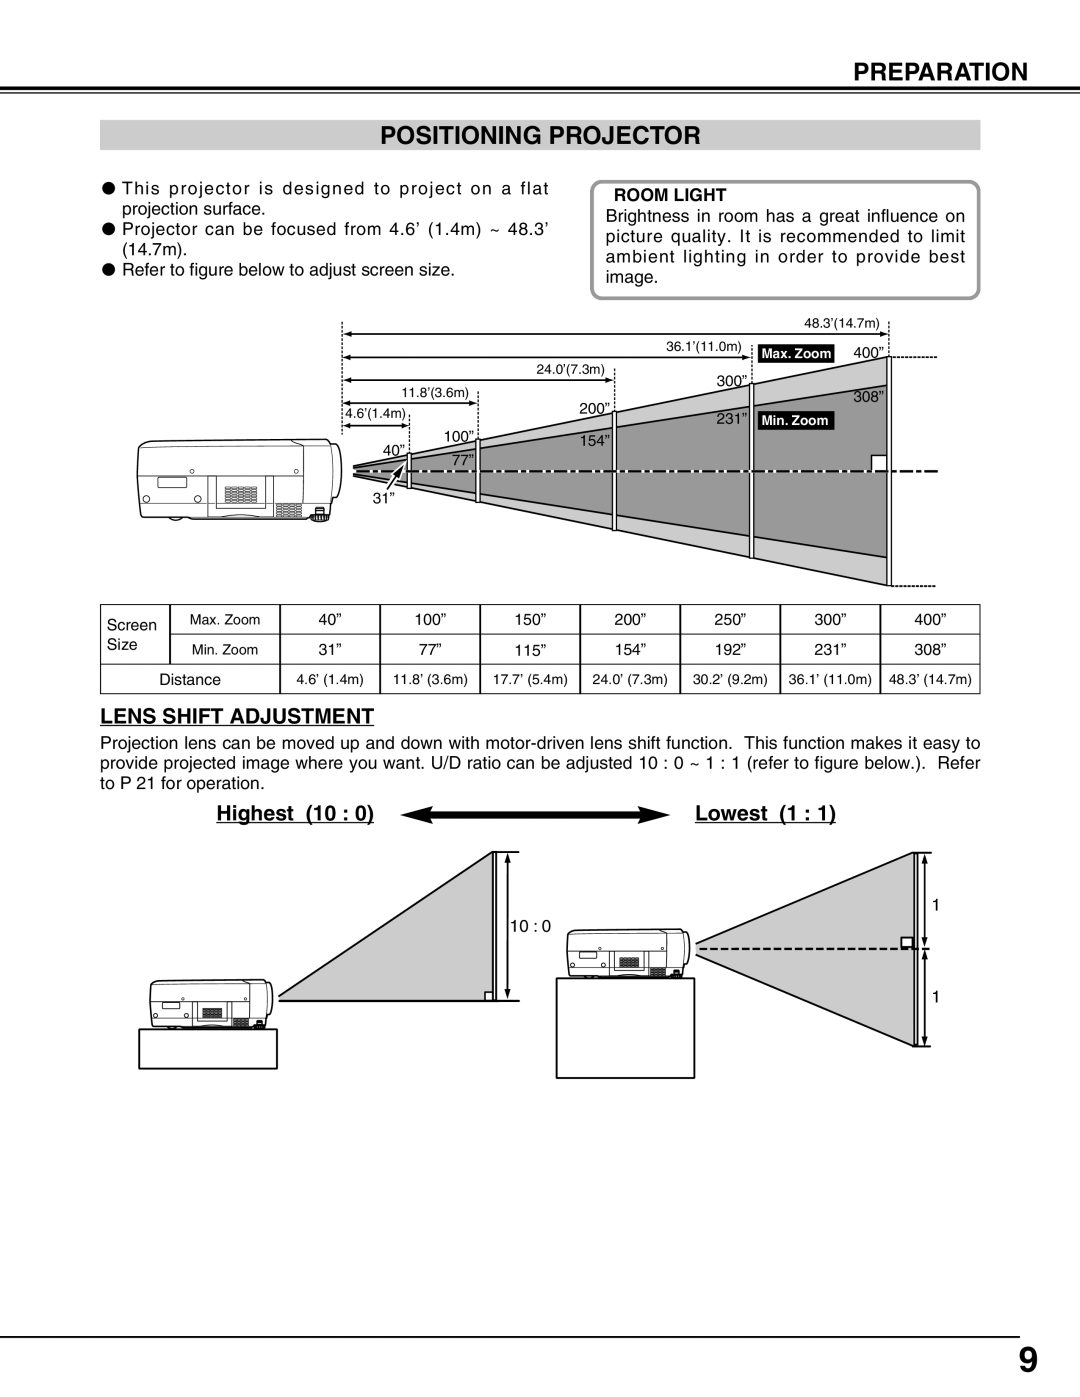 Eiki LC-X70 instruction manual Preparation Positioning Projector, Lens Shift Adjustment, Highest 10, Lowest 1 